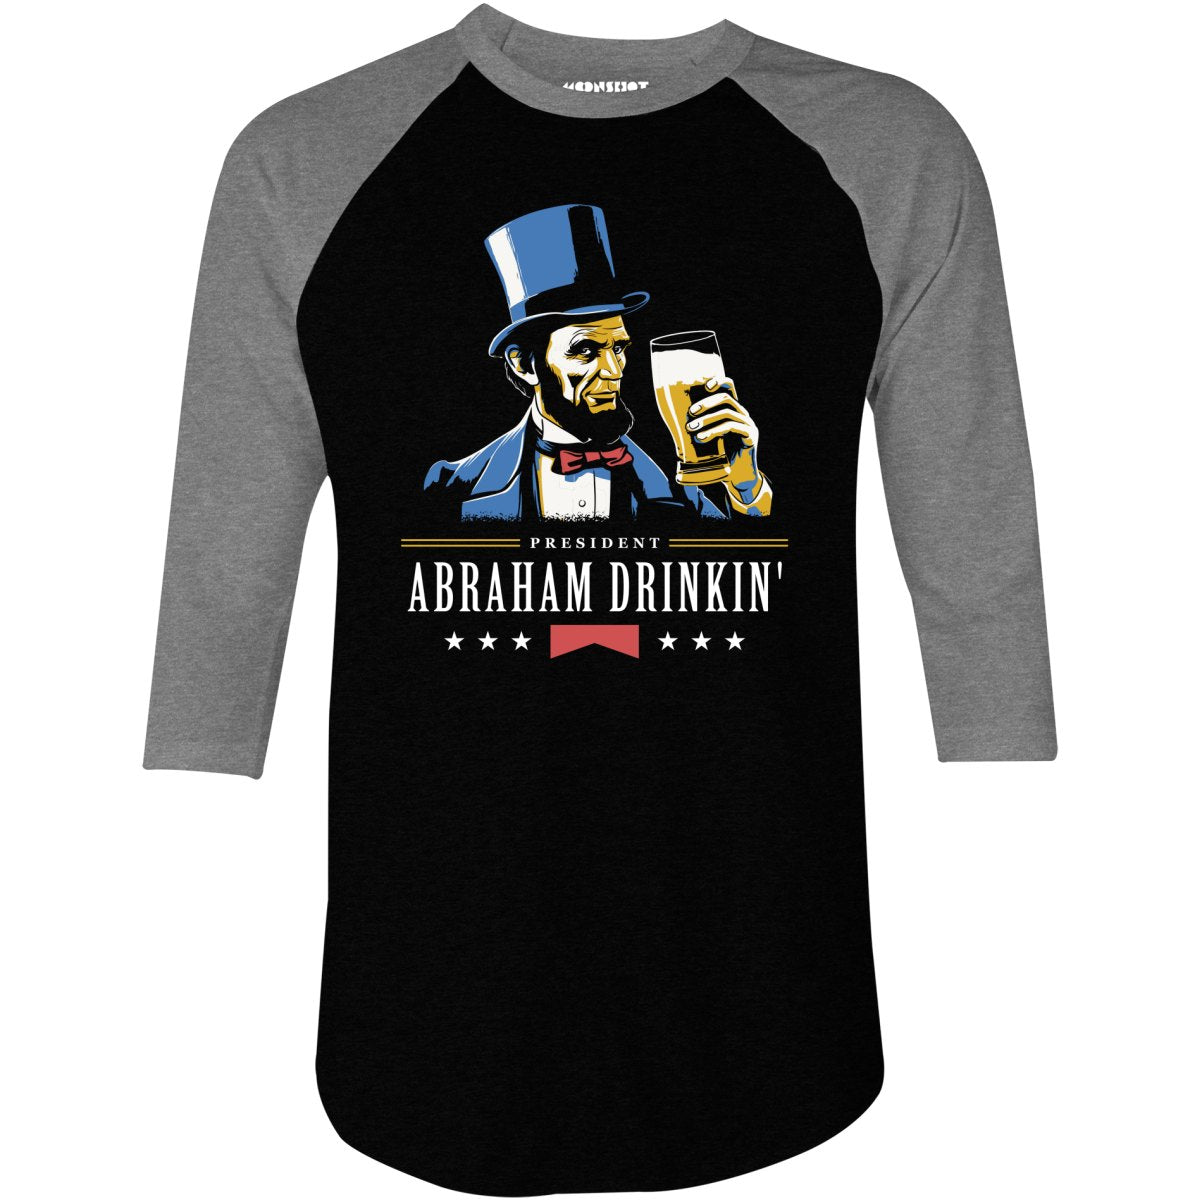 President Abraham Drinkin' - 3/4 Sleeve Raglan T-Shirt